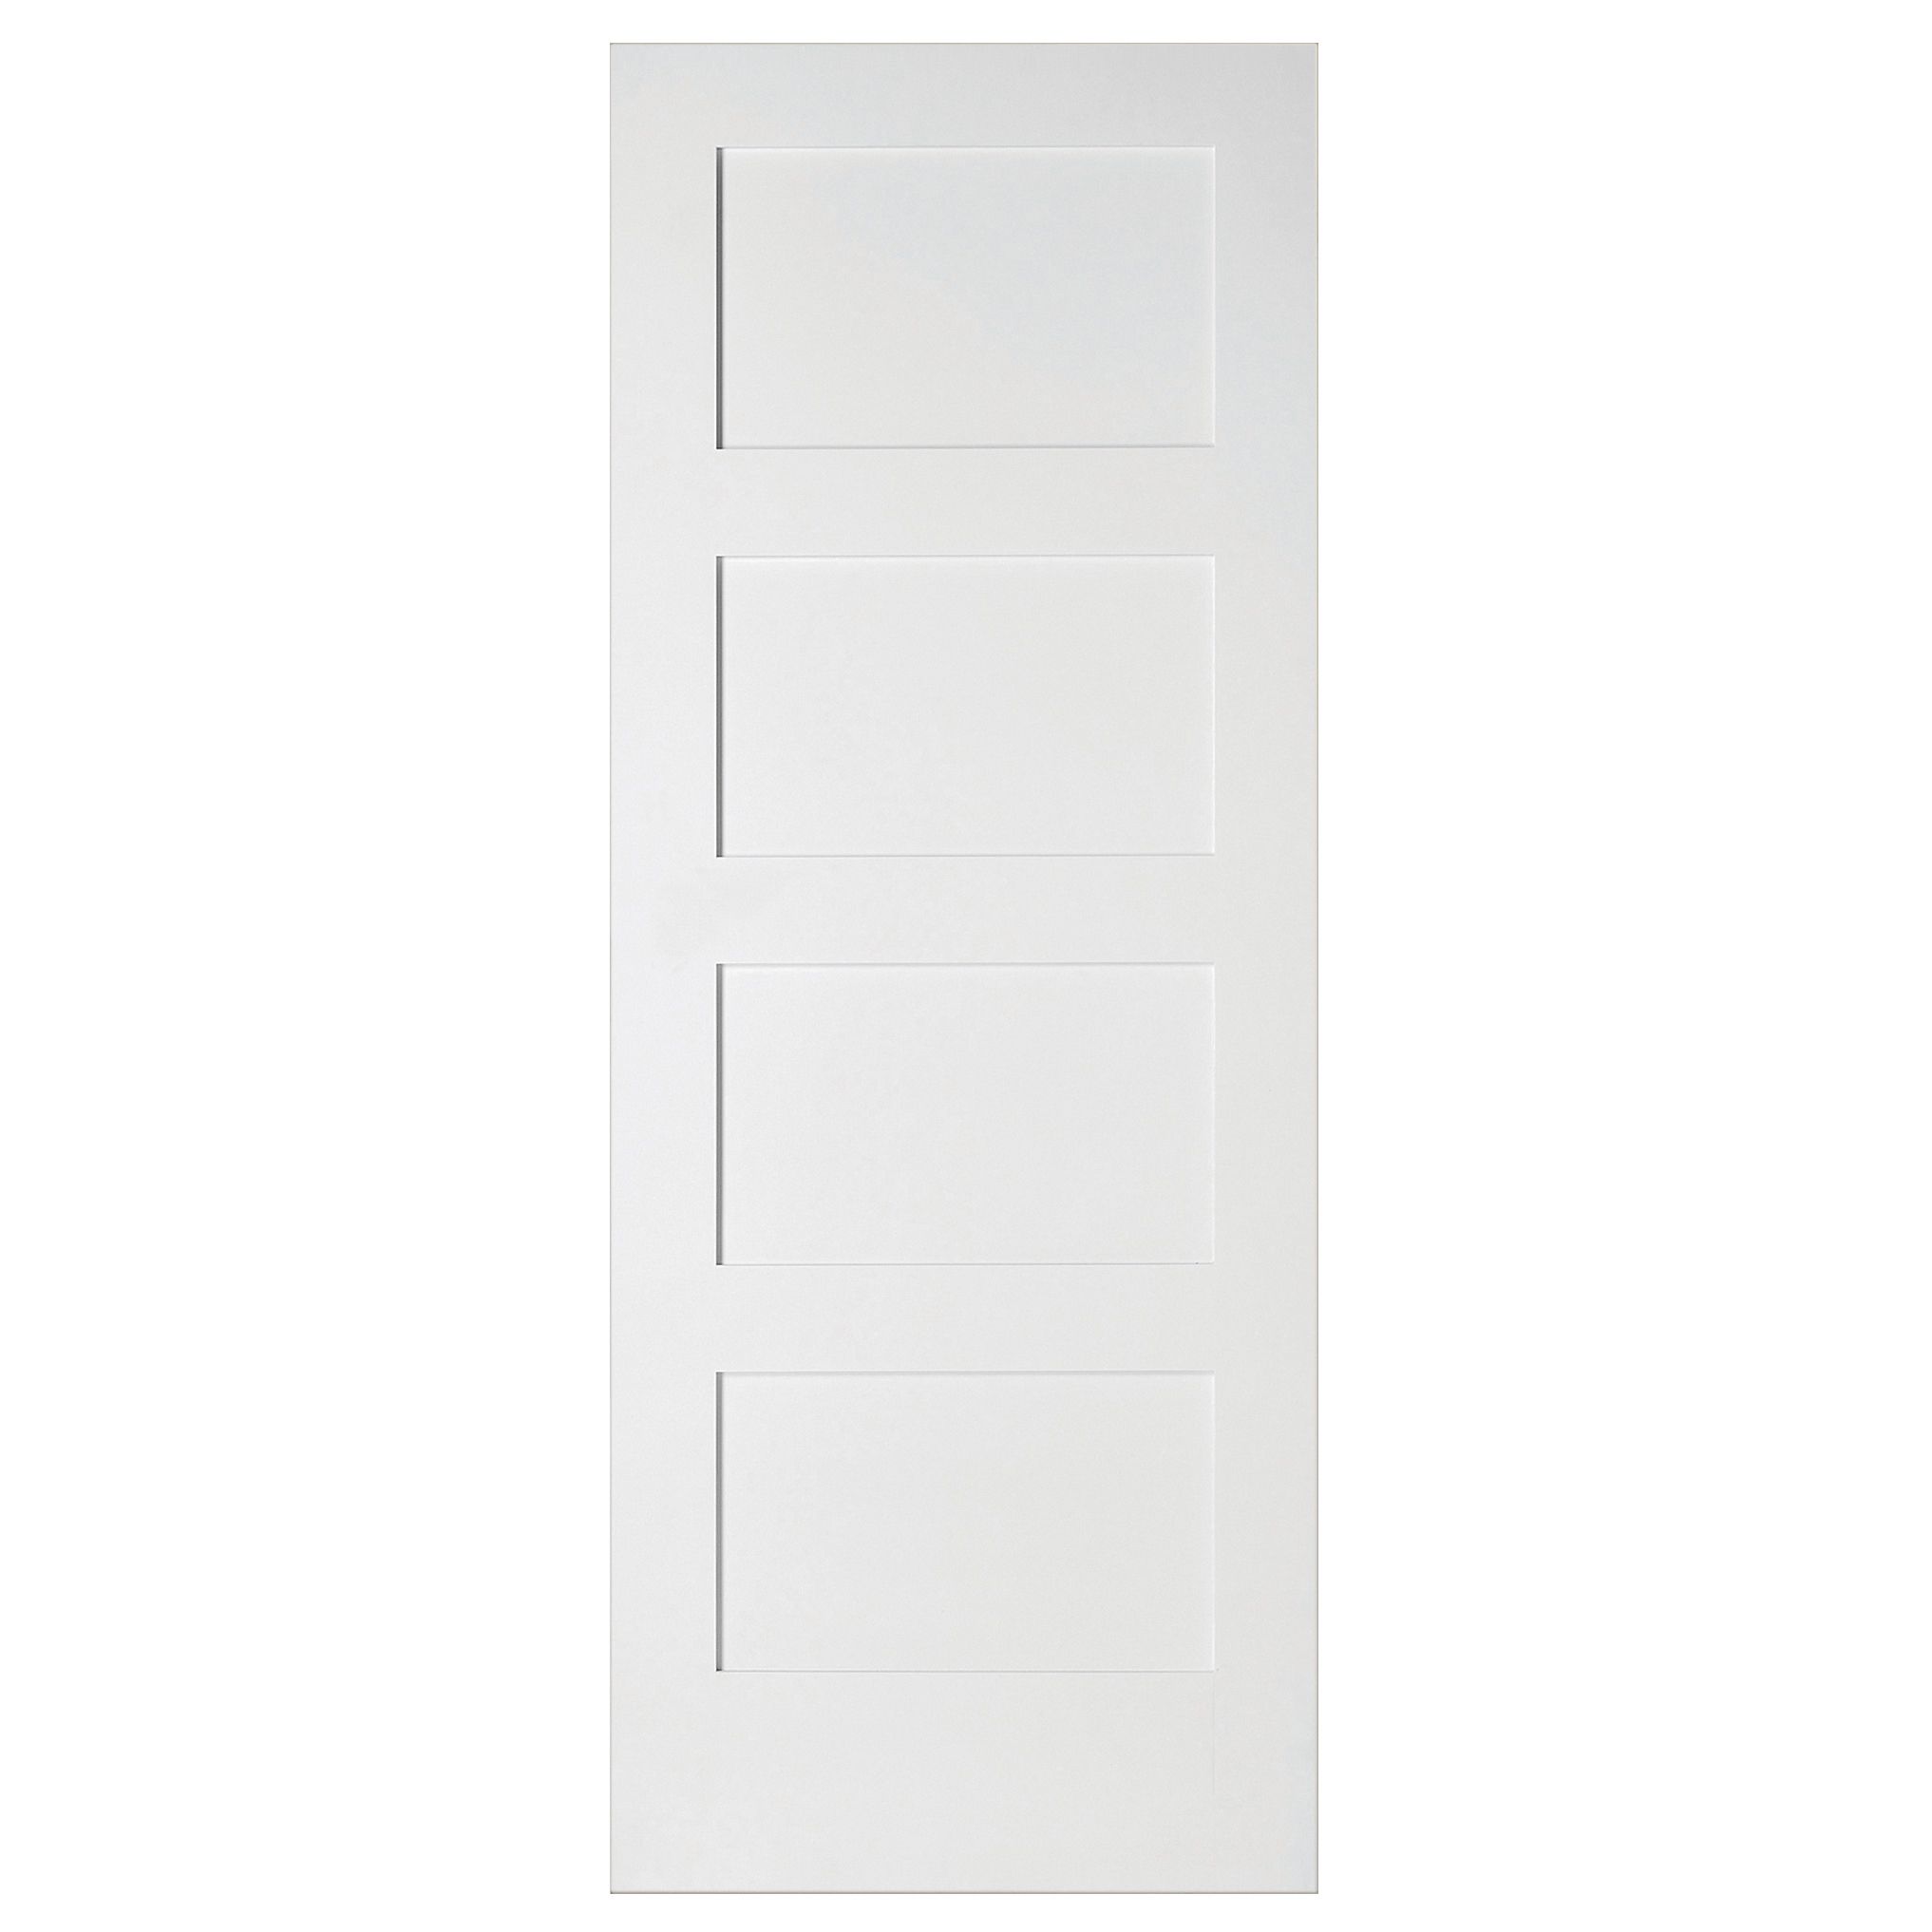 B&Q 4 panel Shaker White Internal Door, (H)1981mm (W)762mm (T)35mm ...